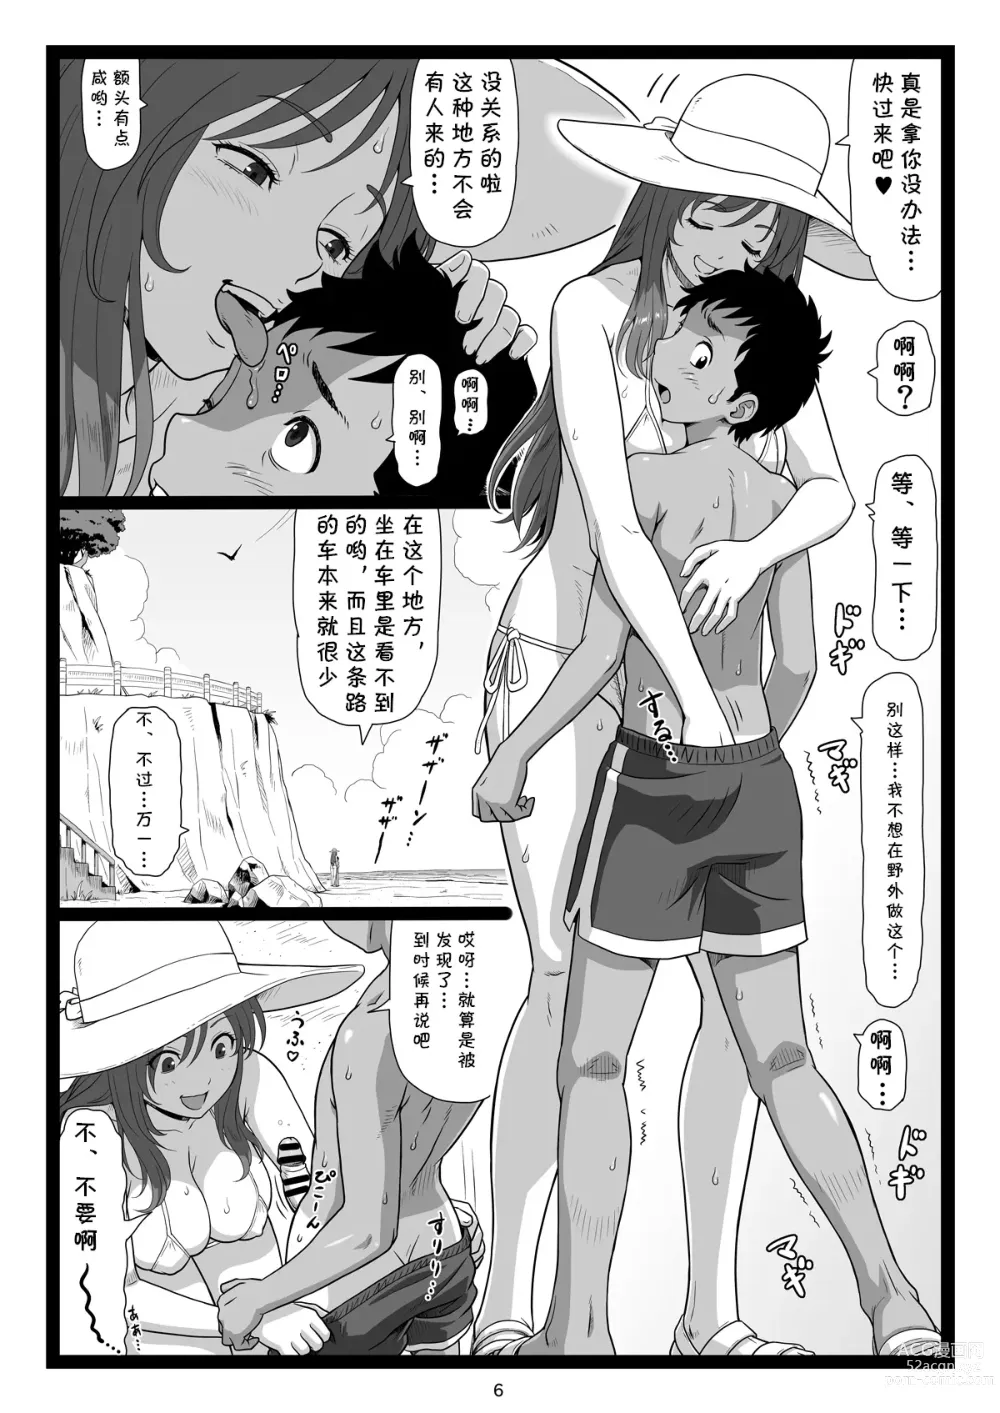 Page 6 of doujinshi Natsuyasumi no Omoide Gekan